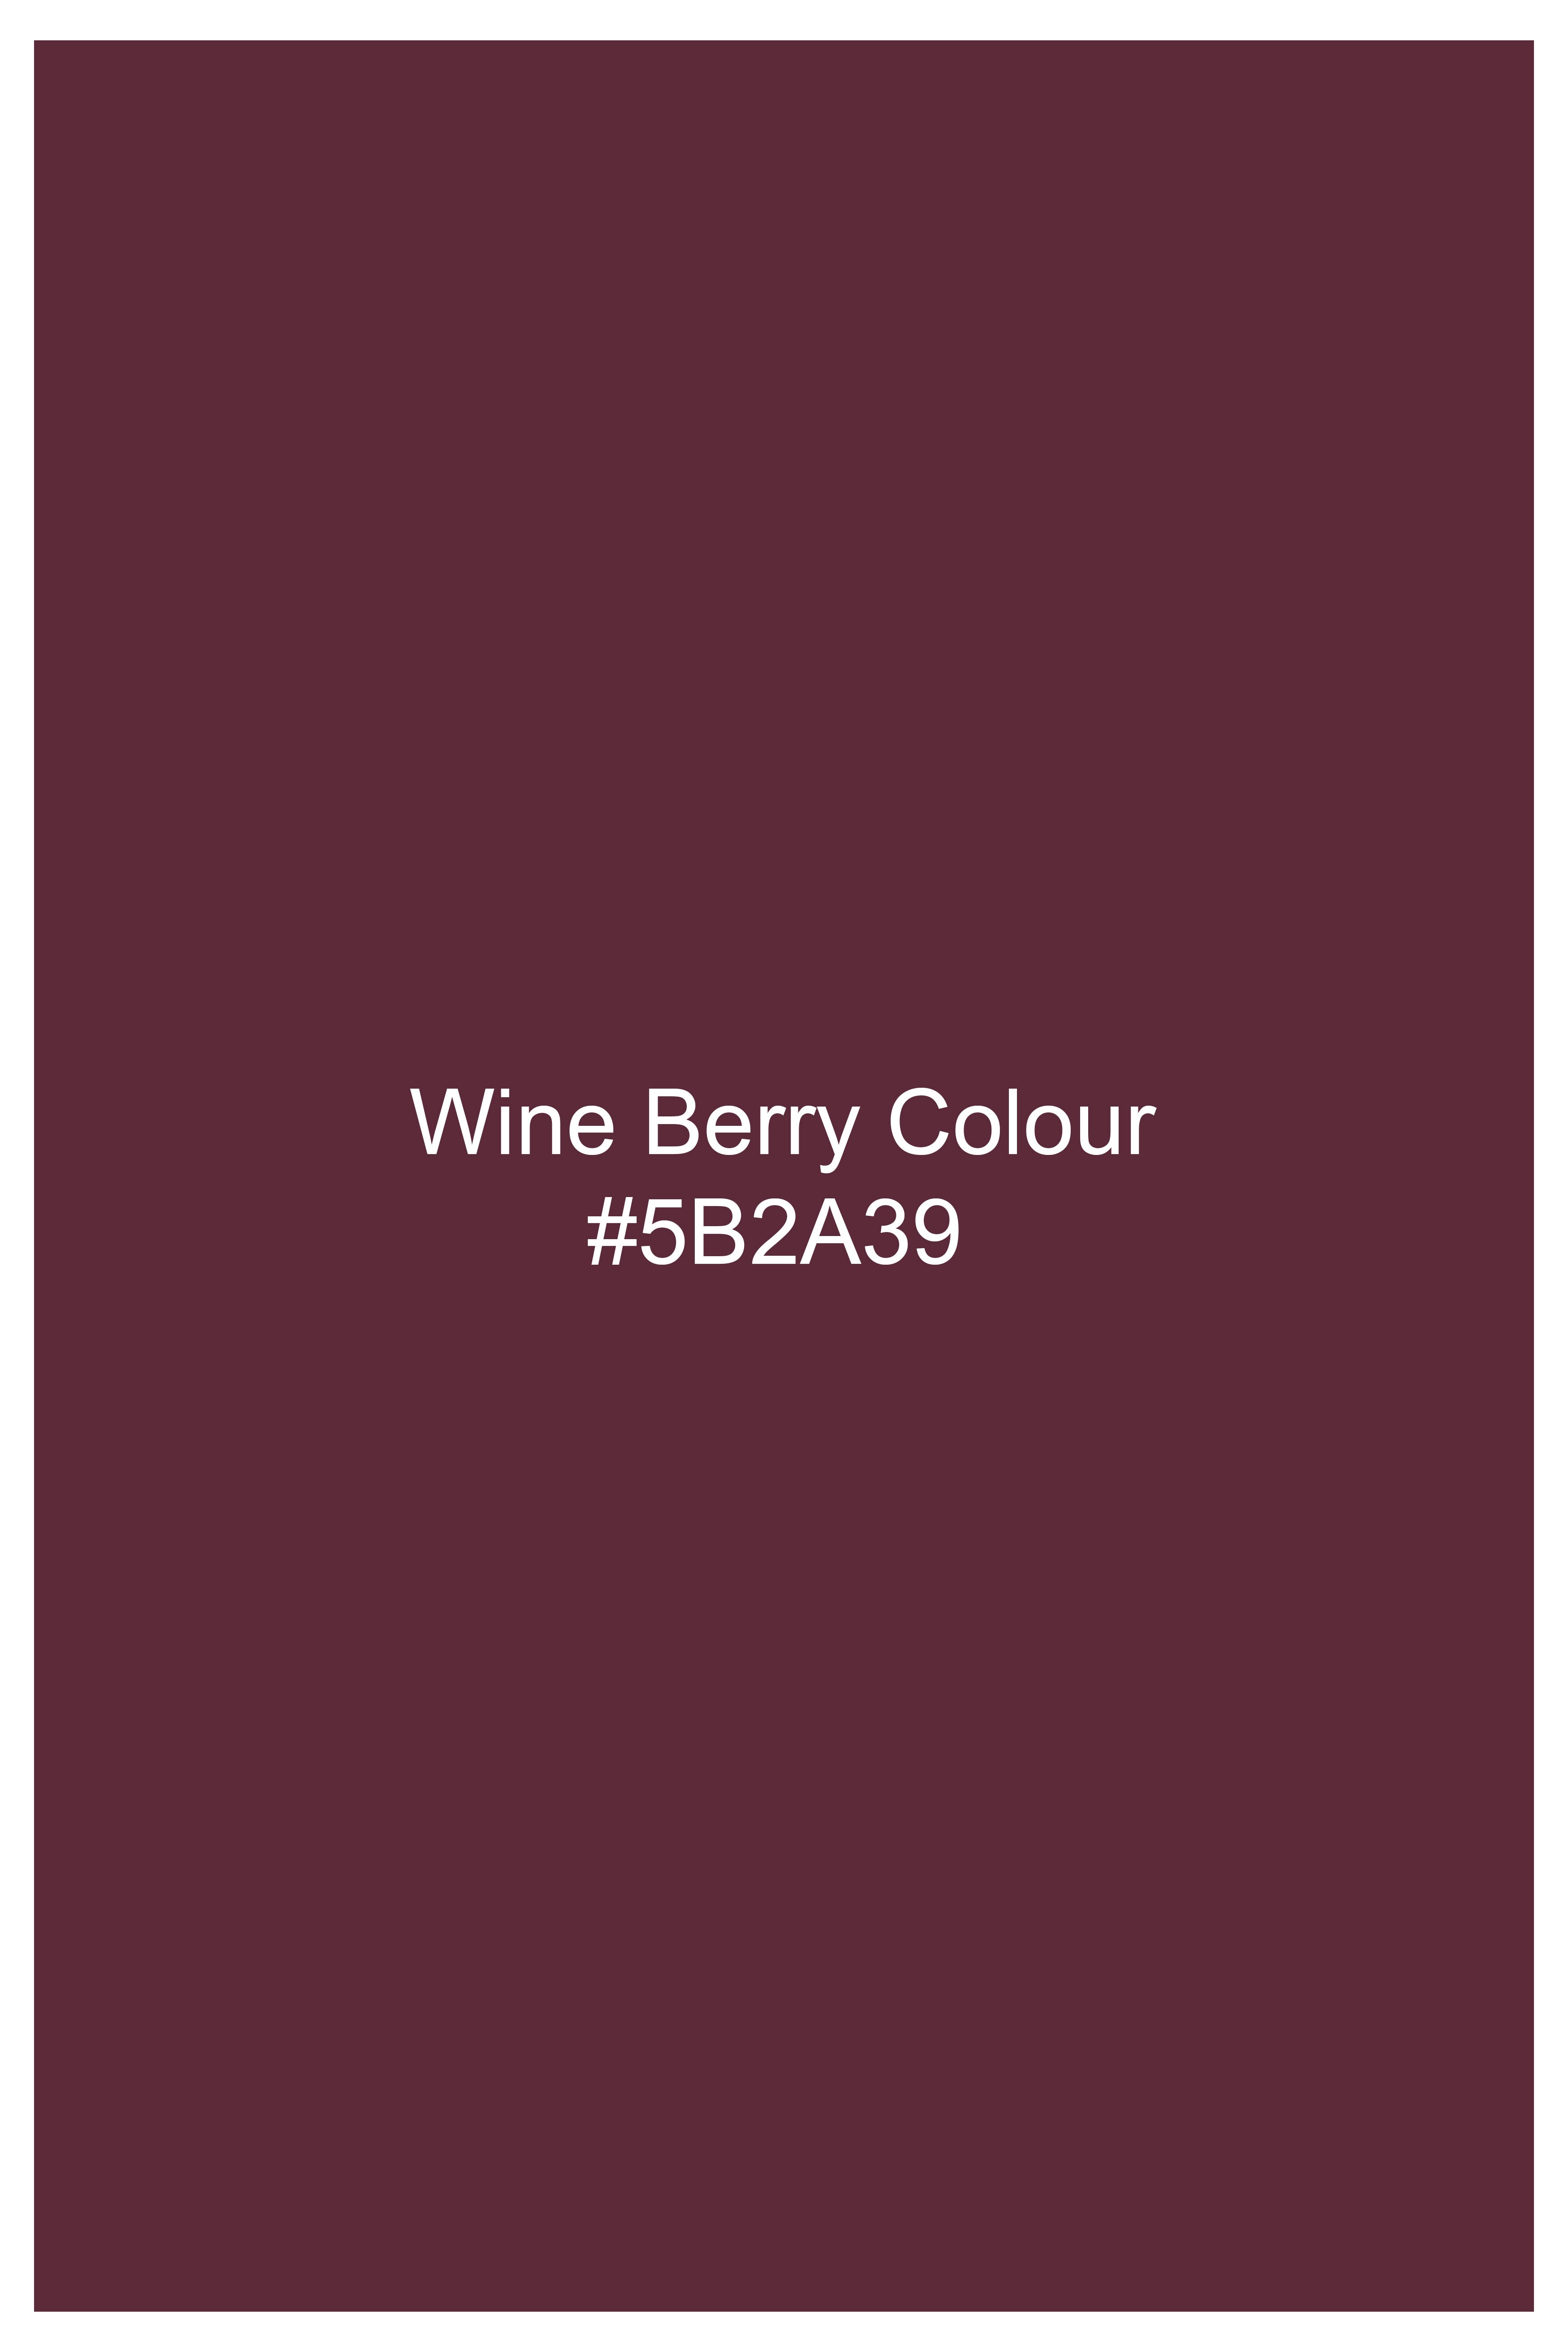 Wine Berry Leaves Hand Painted Super Soft Premium Giza Cotton Designer Shirt 4608-BLK-ART01-38, 4608-BLK-ART01-H-38, 4608-BLK-ART01-39, 4608-BLK-ART01-H-39, 4608-BLK-ART01-40, 4608-BLK-ART01-H-40, 4608-BLK-ART01-42, 4608-BLK-ART01-H-42, 4608-BLK-ART01-44, 4608-BLK-ART01-H-44, 4608-BLK-ART01-46, 4608-BLK-ART01-H-46, 4608-BLK-ART01-48, 4608-BLK-ART01-H-48, 4608-BLK-ART01-50, 4608-BLK-ART01-H-50, 4608-BLK-ART01-52, 4608-BLK-ART01-H-52